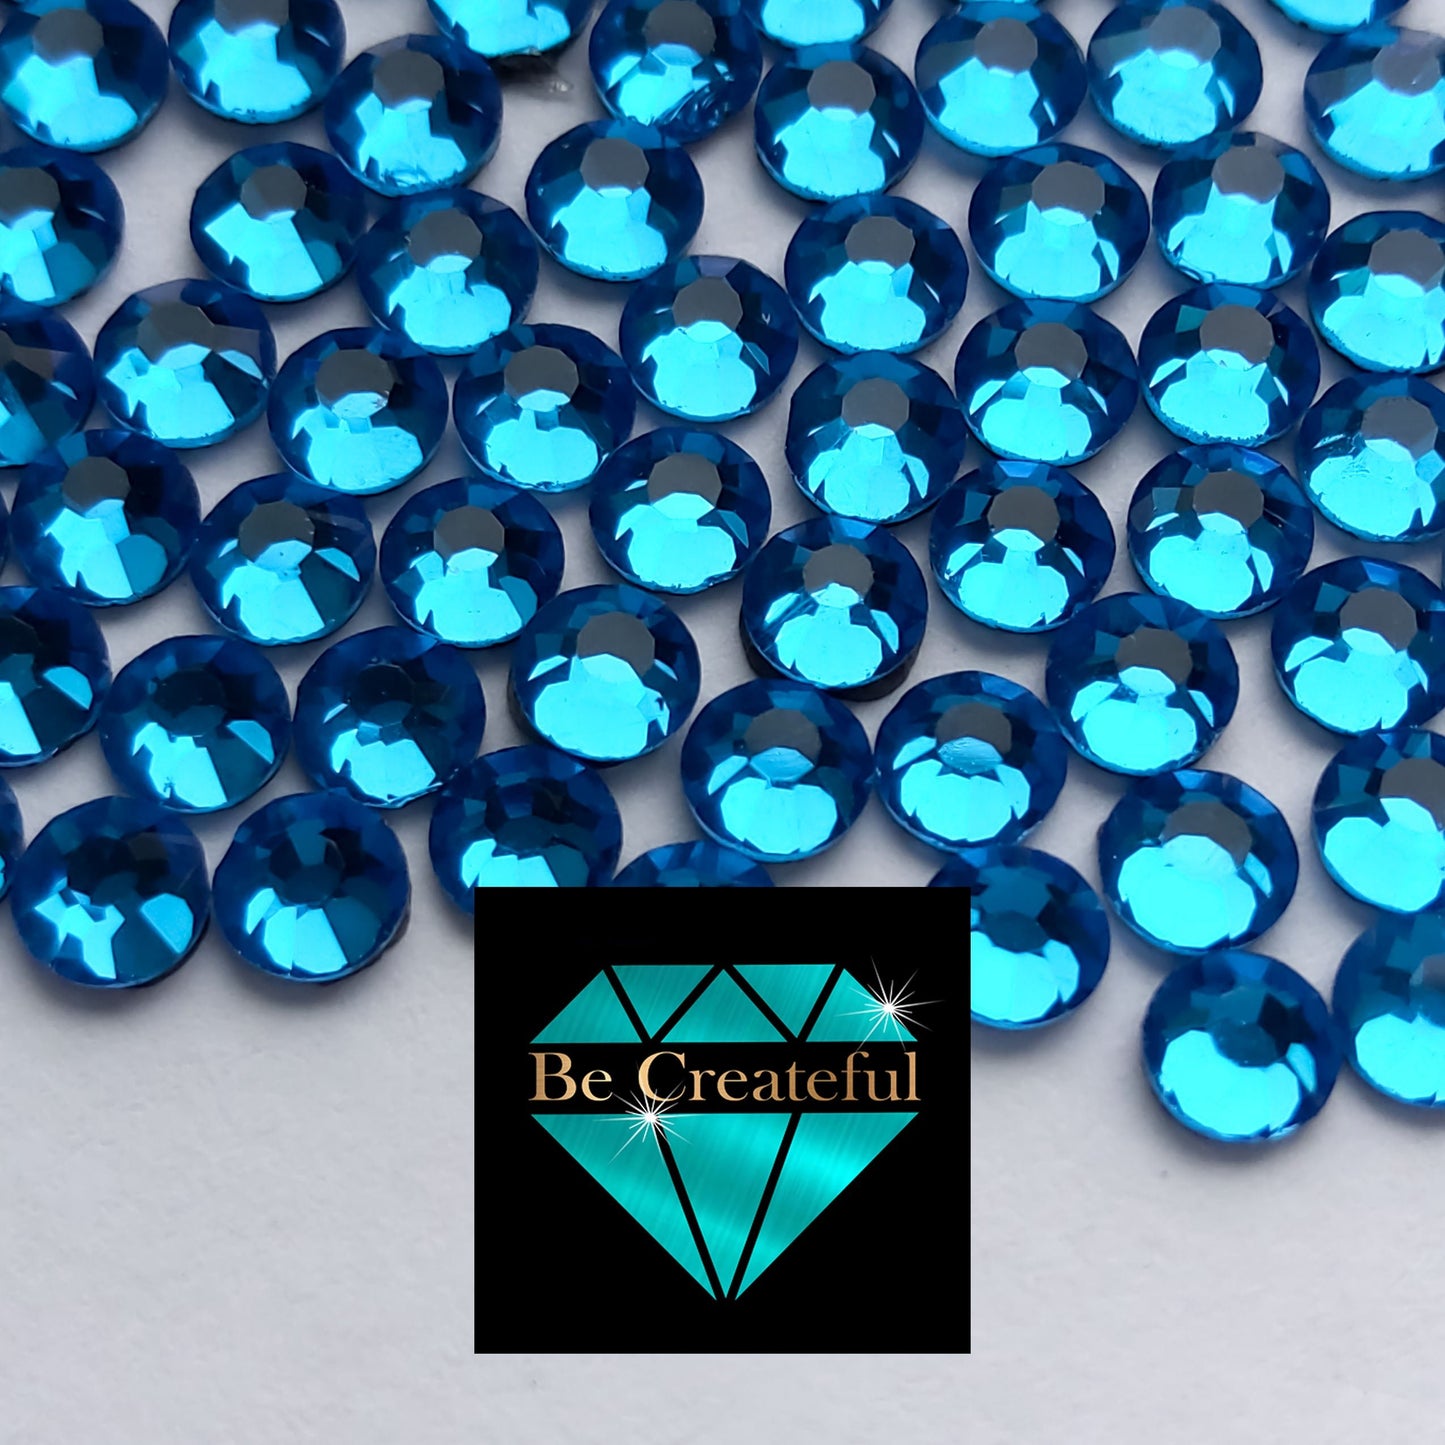 DMC Capri Blue Glass Hotfix Rhinestones - Be Createful, Beautiful Rhinestones at wholesale prices.